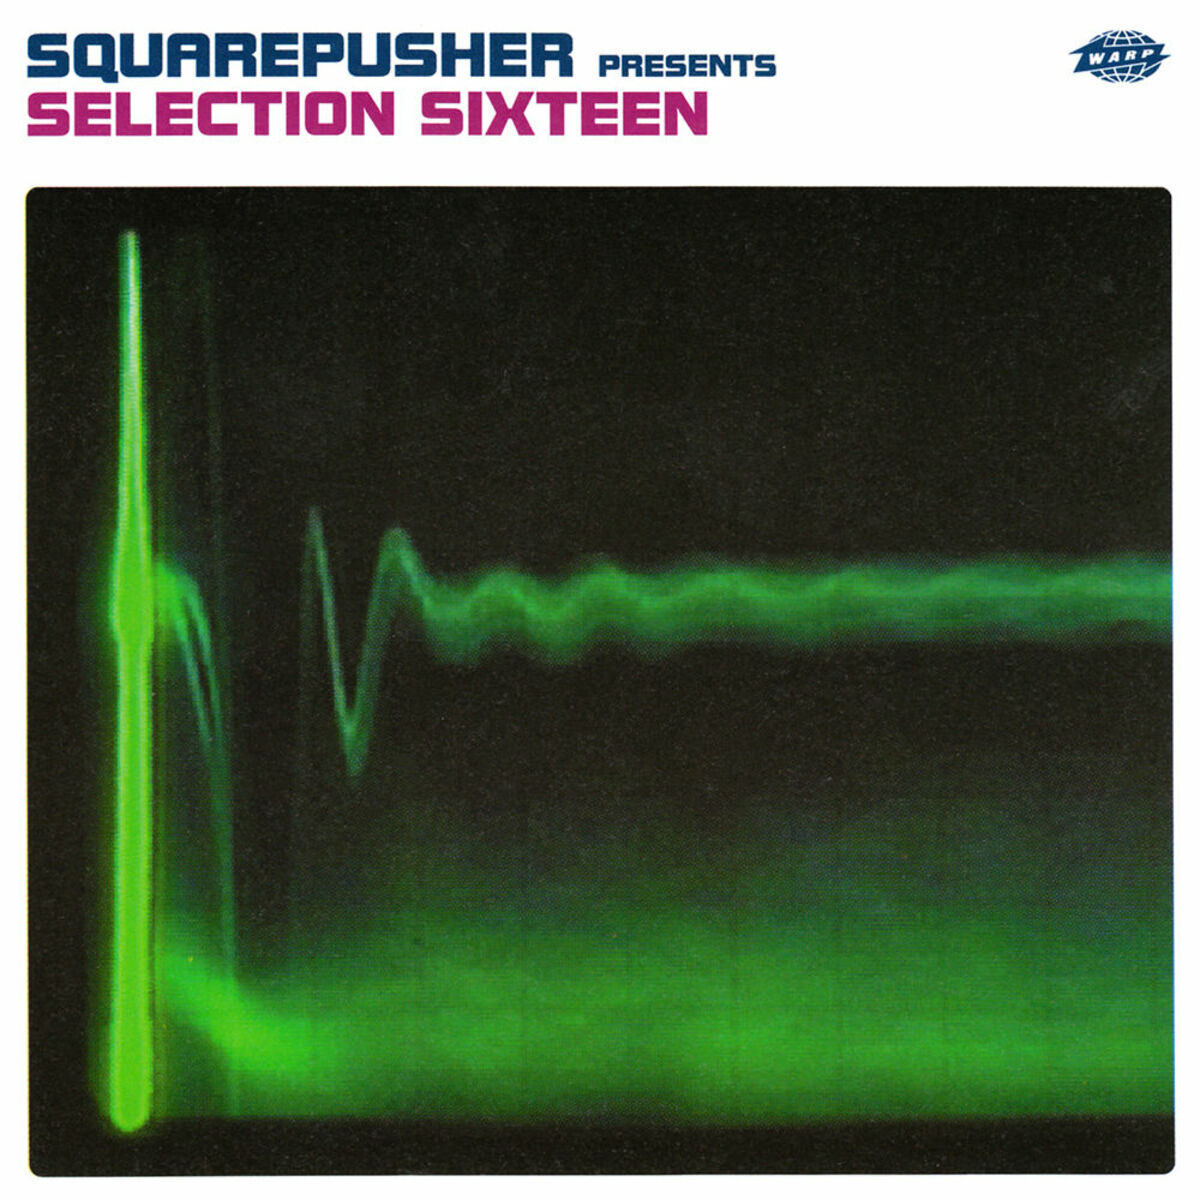 Squarepusher: albums, songs, playlists | Listen on Deezer